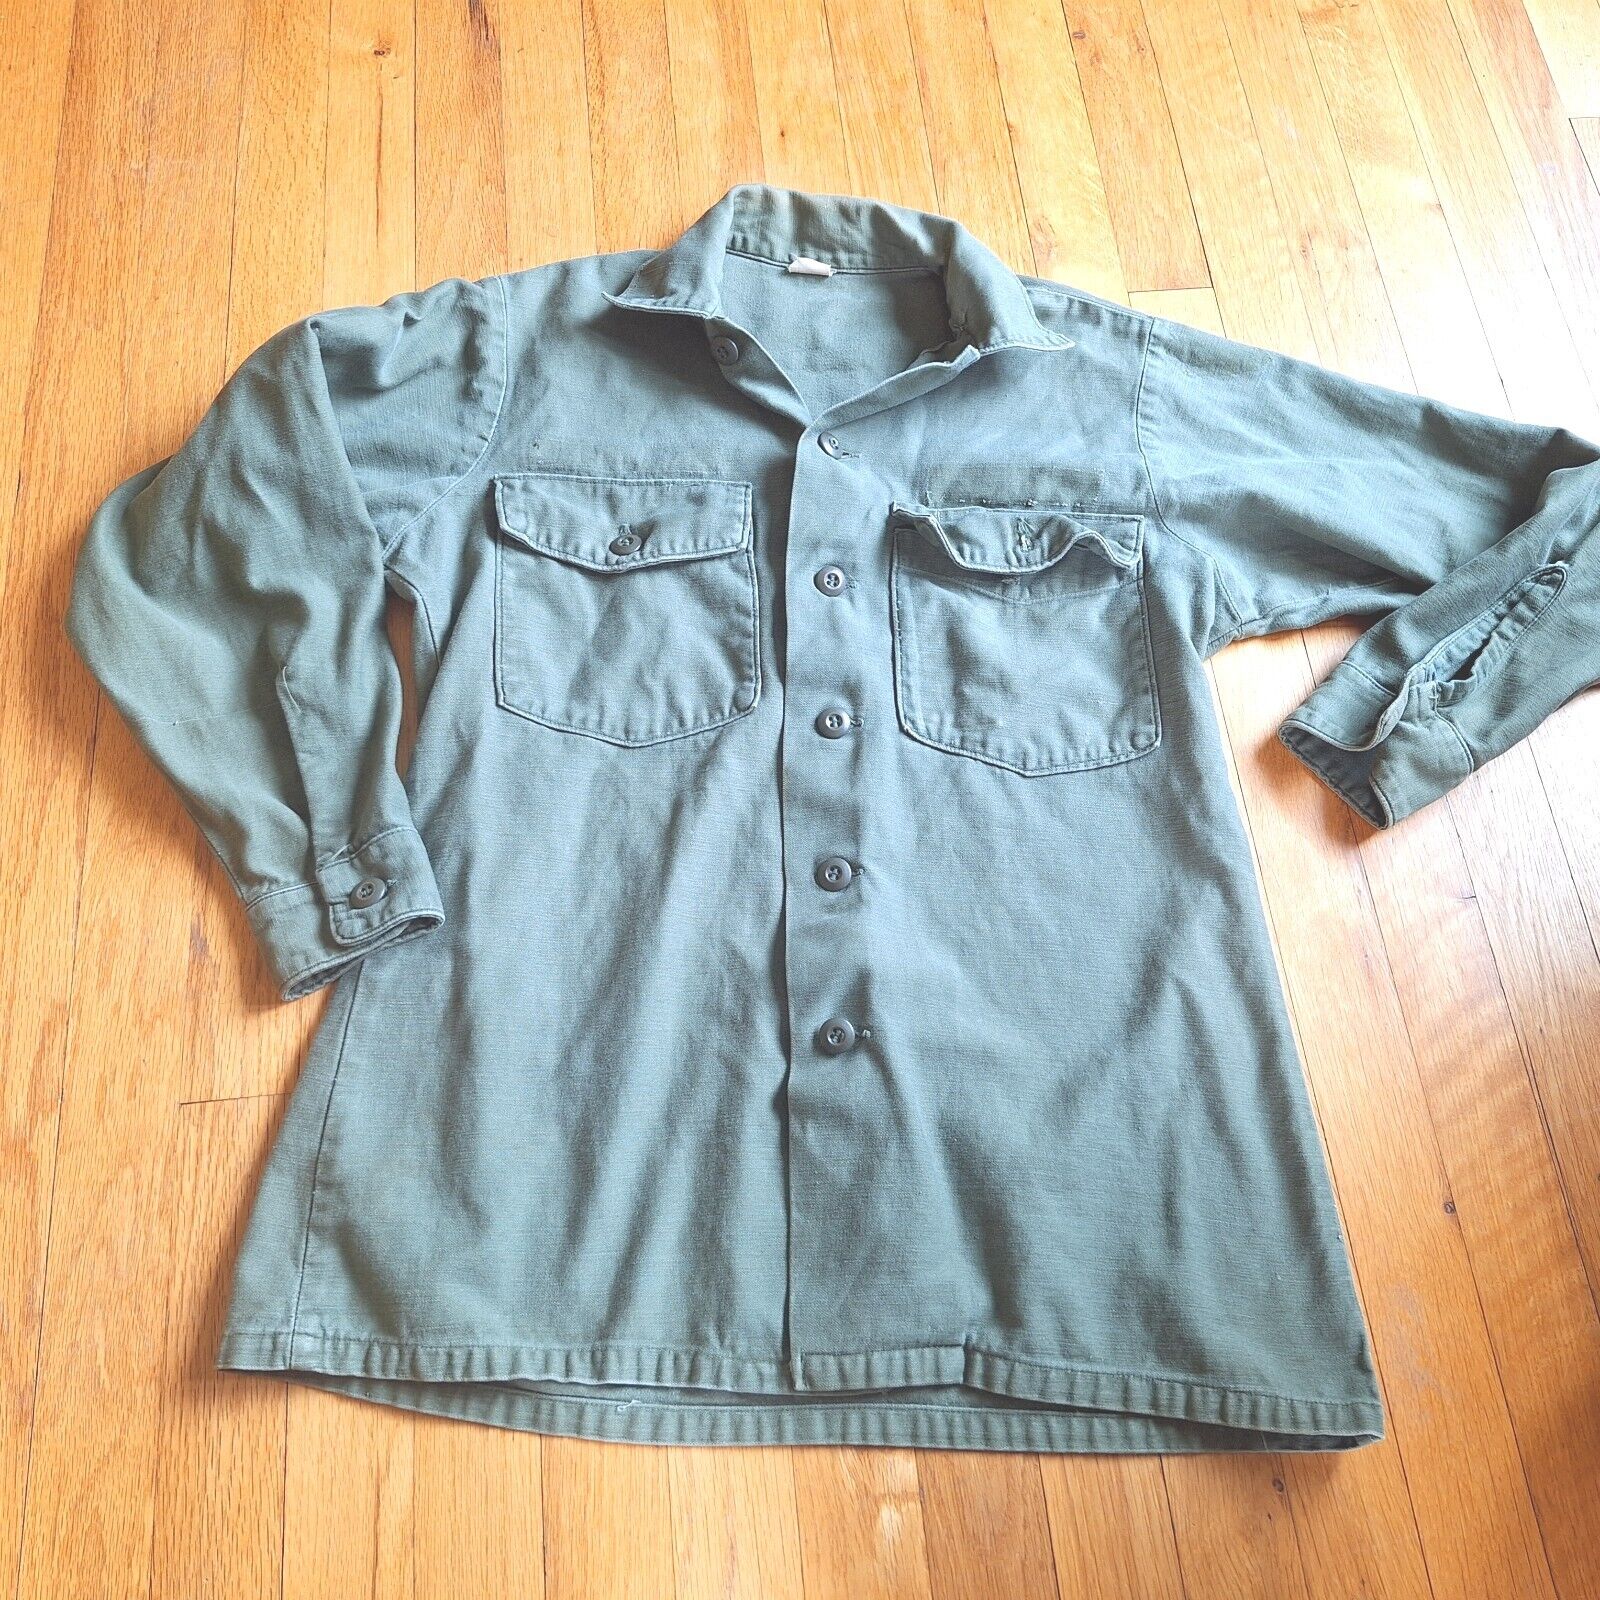 VINTAGE US Army MILITARY Long Sleeve Shirt OG-107 15 1/2 x 31 8405-782-3017 VTG